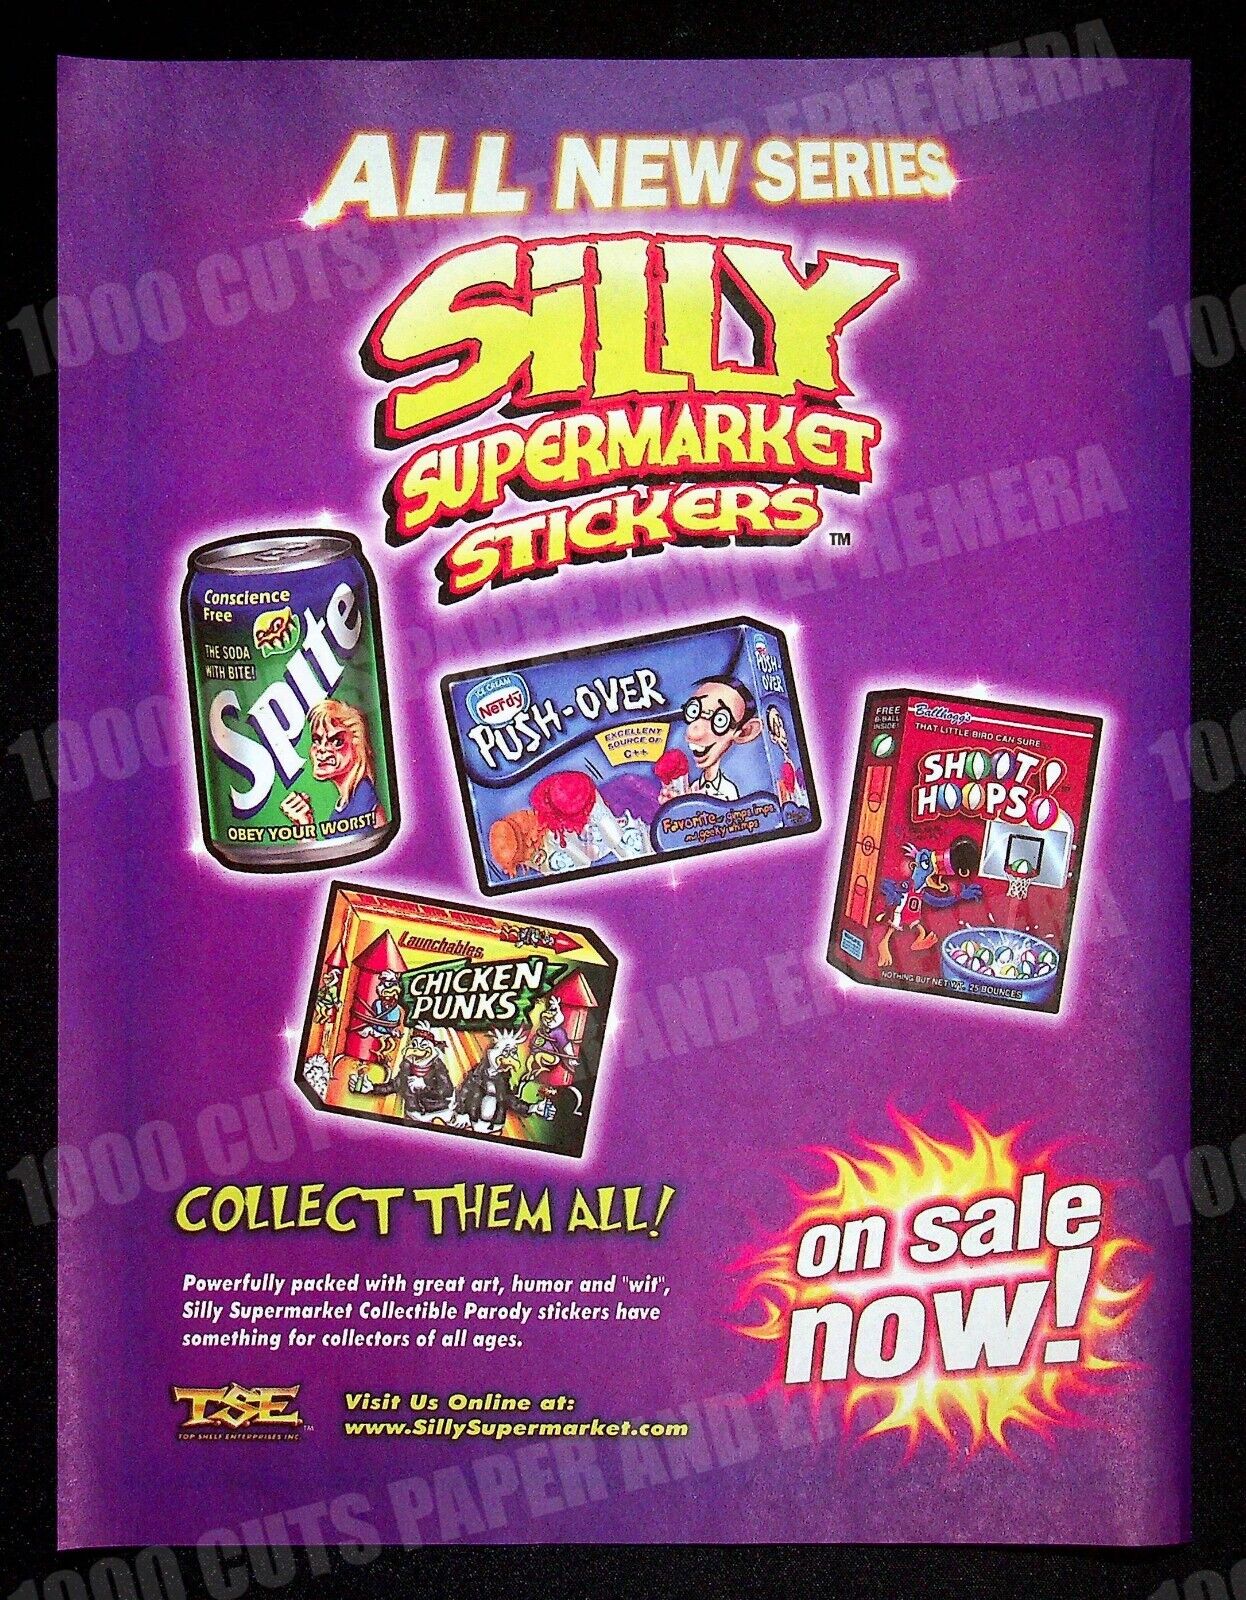 Silly Supermarket Stickers TSE Top Shelf 2008 Print Magazine Ad Poster ADVERT